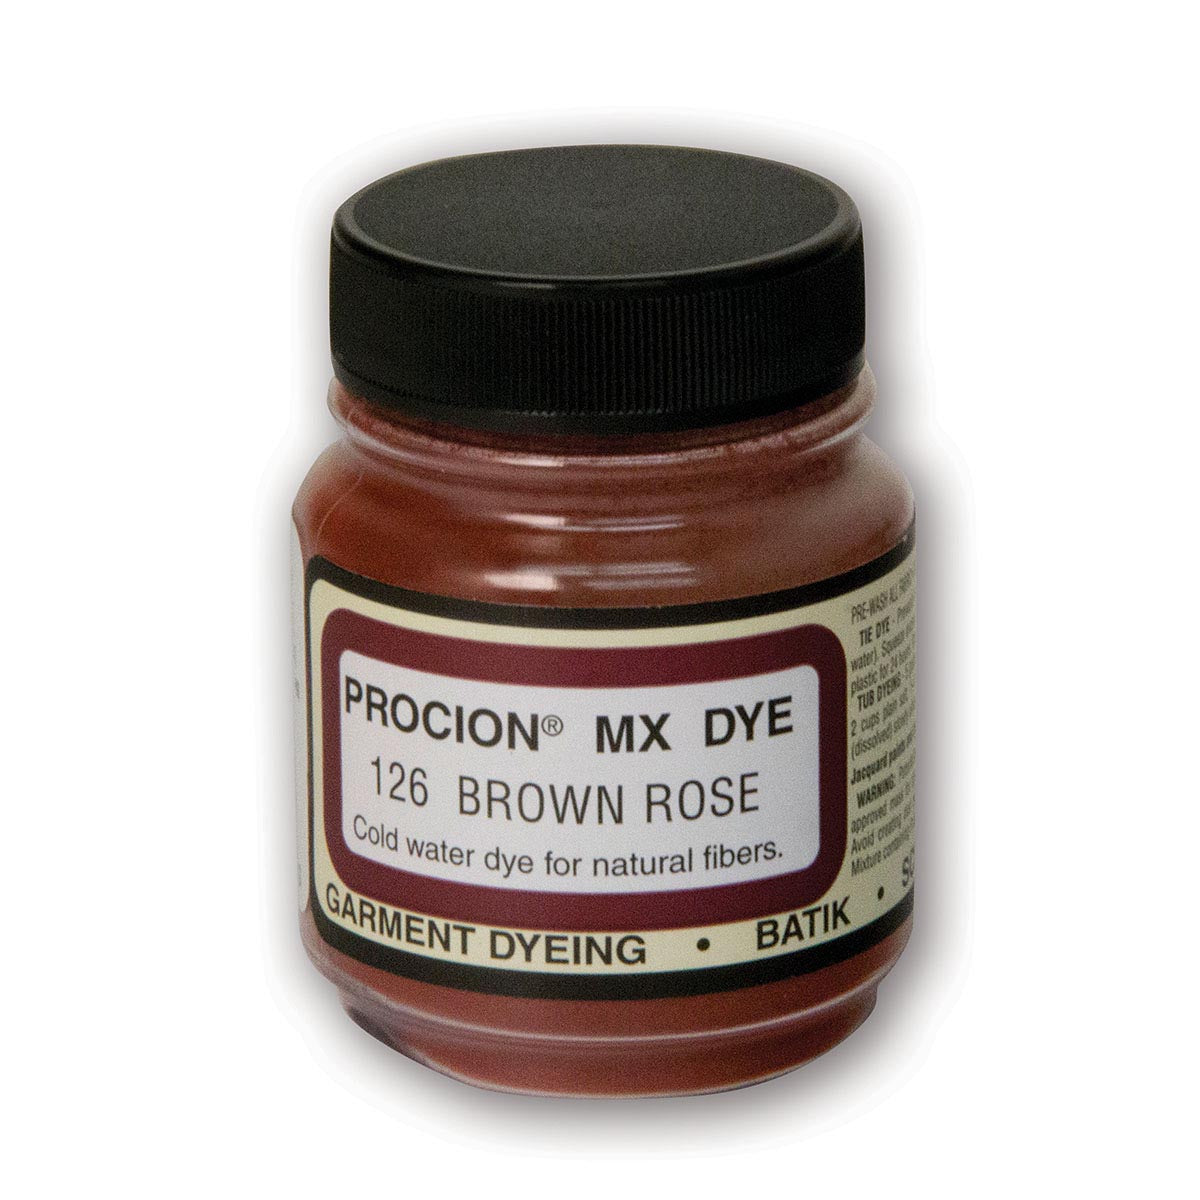 Jacquard - Procion MX Dye - Fabric Textile - Brown Rose 126